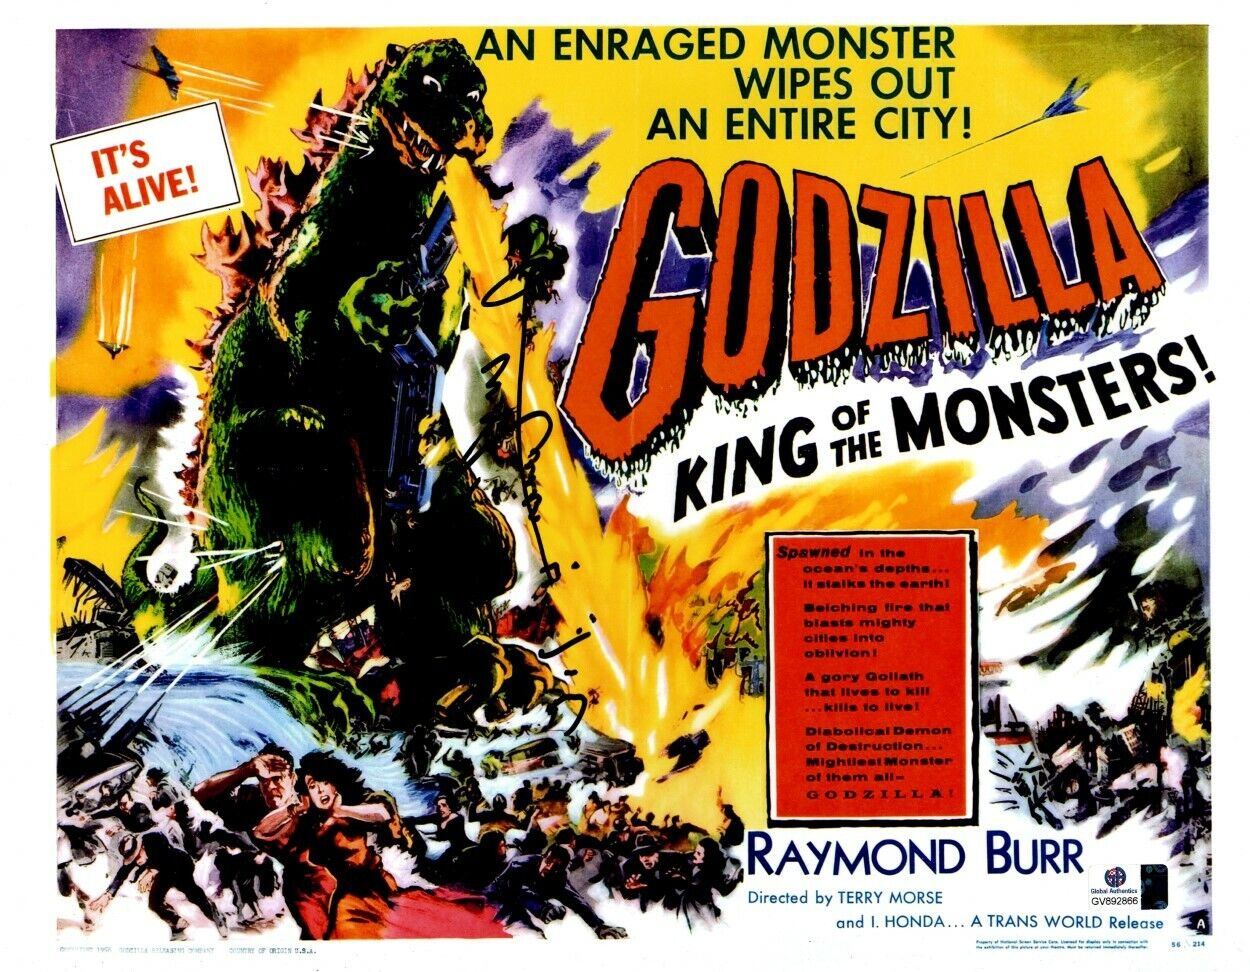 Harou Nakajima Signed Autographed 11X14 Photo Poster painting Godzilla King of Monsters GV892866